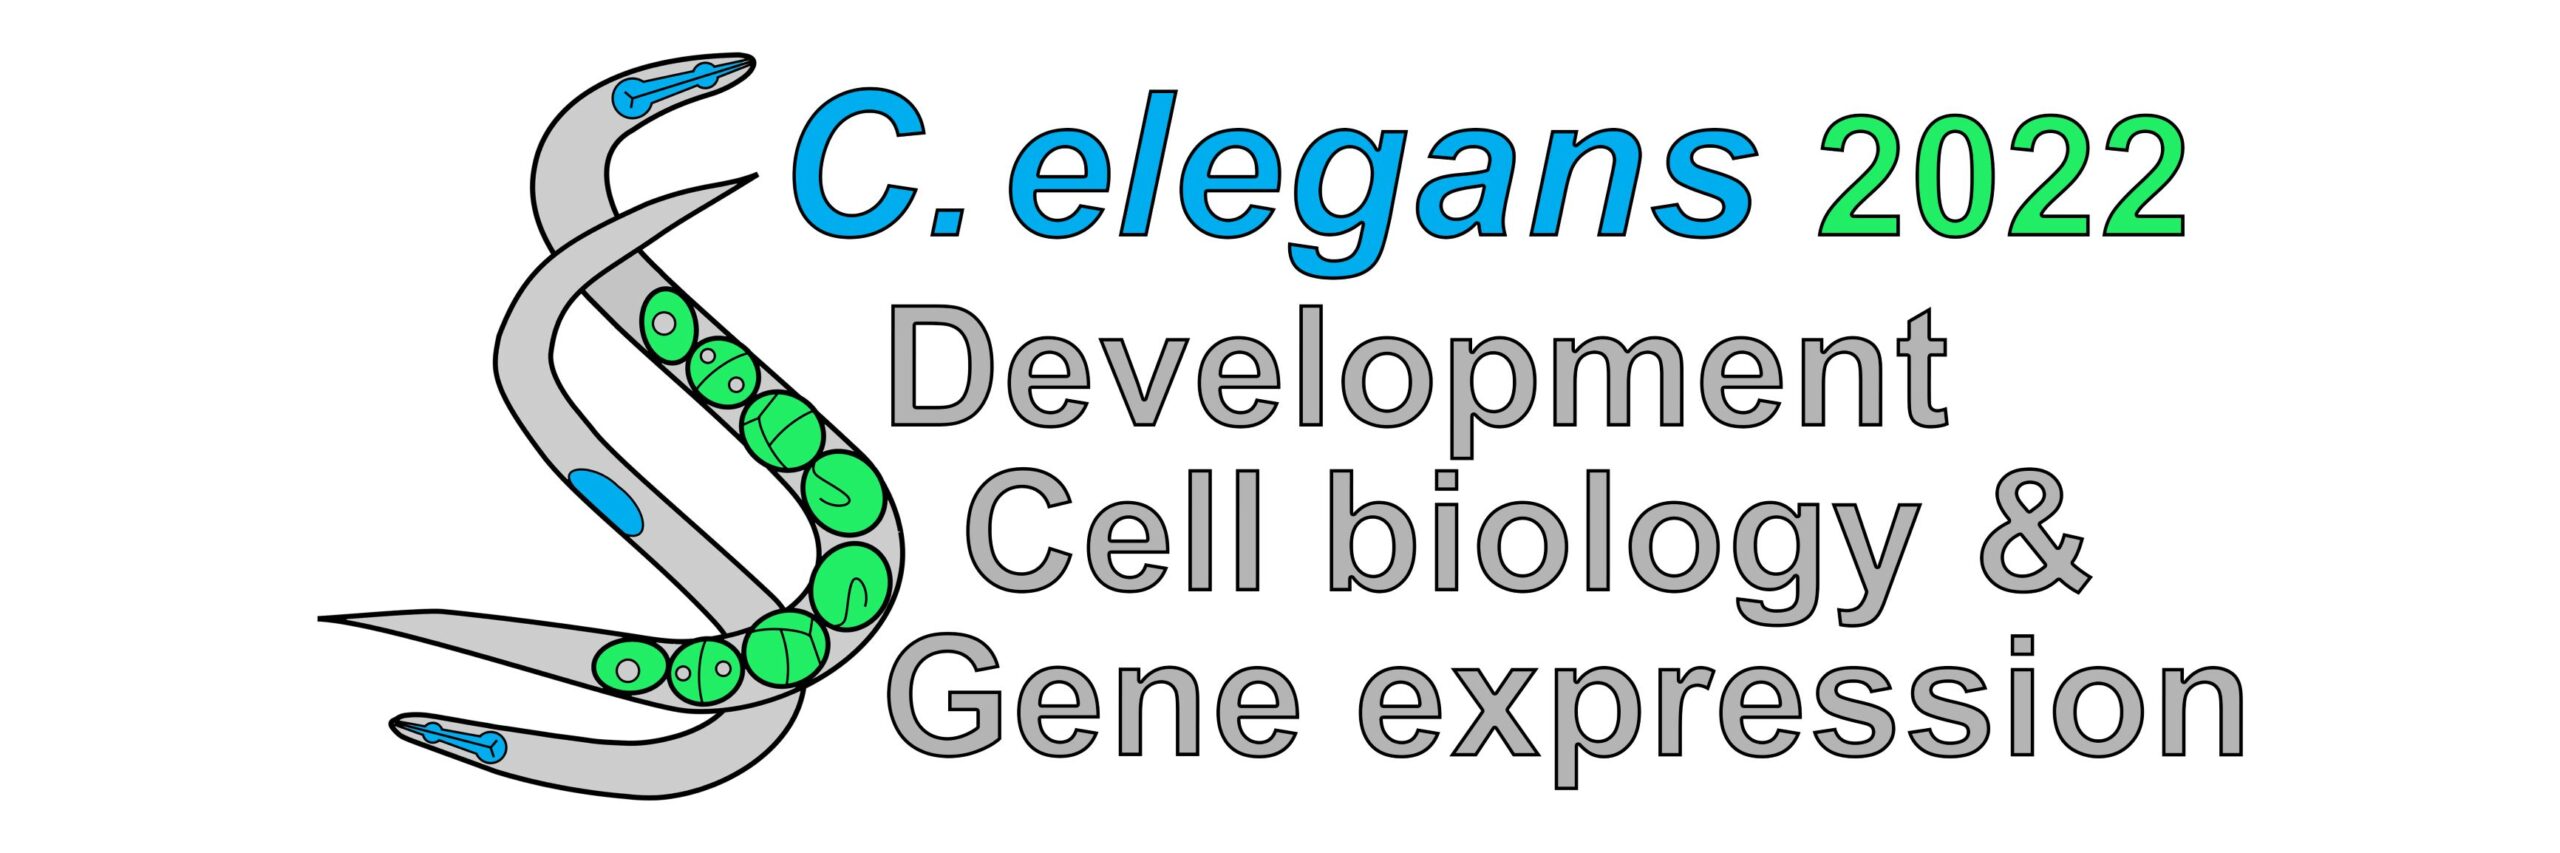 C.elegans Development, Cell Biology, & Gene Expression Meeting